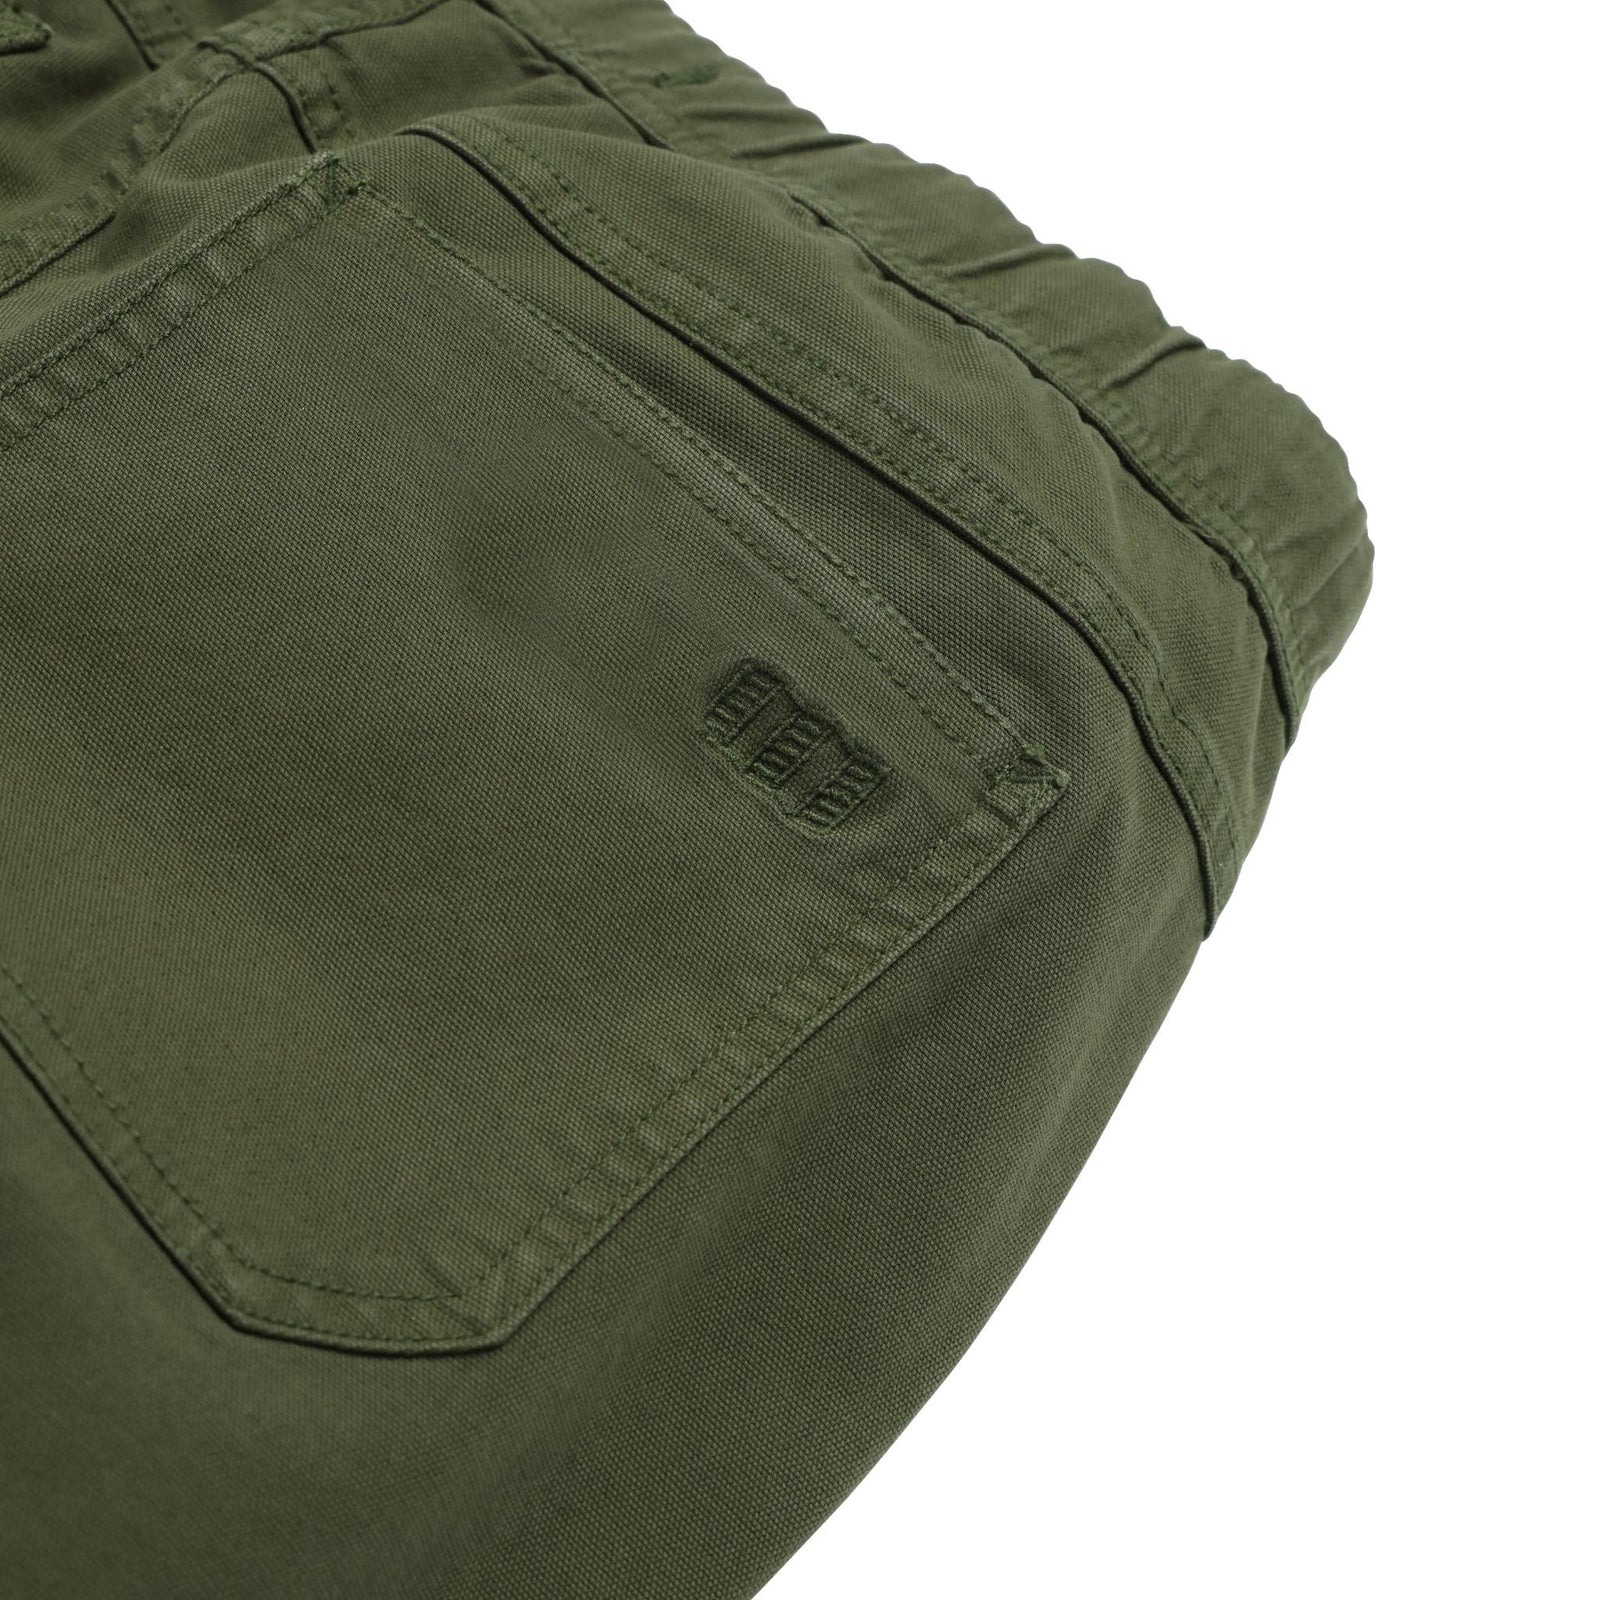 Detail shot of Topo Designs Dirt Pants Slim - Women's in "Olive"